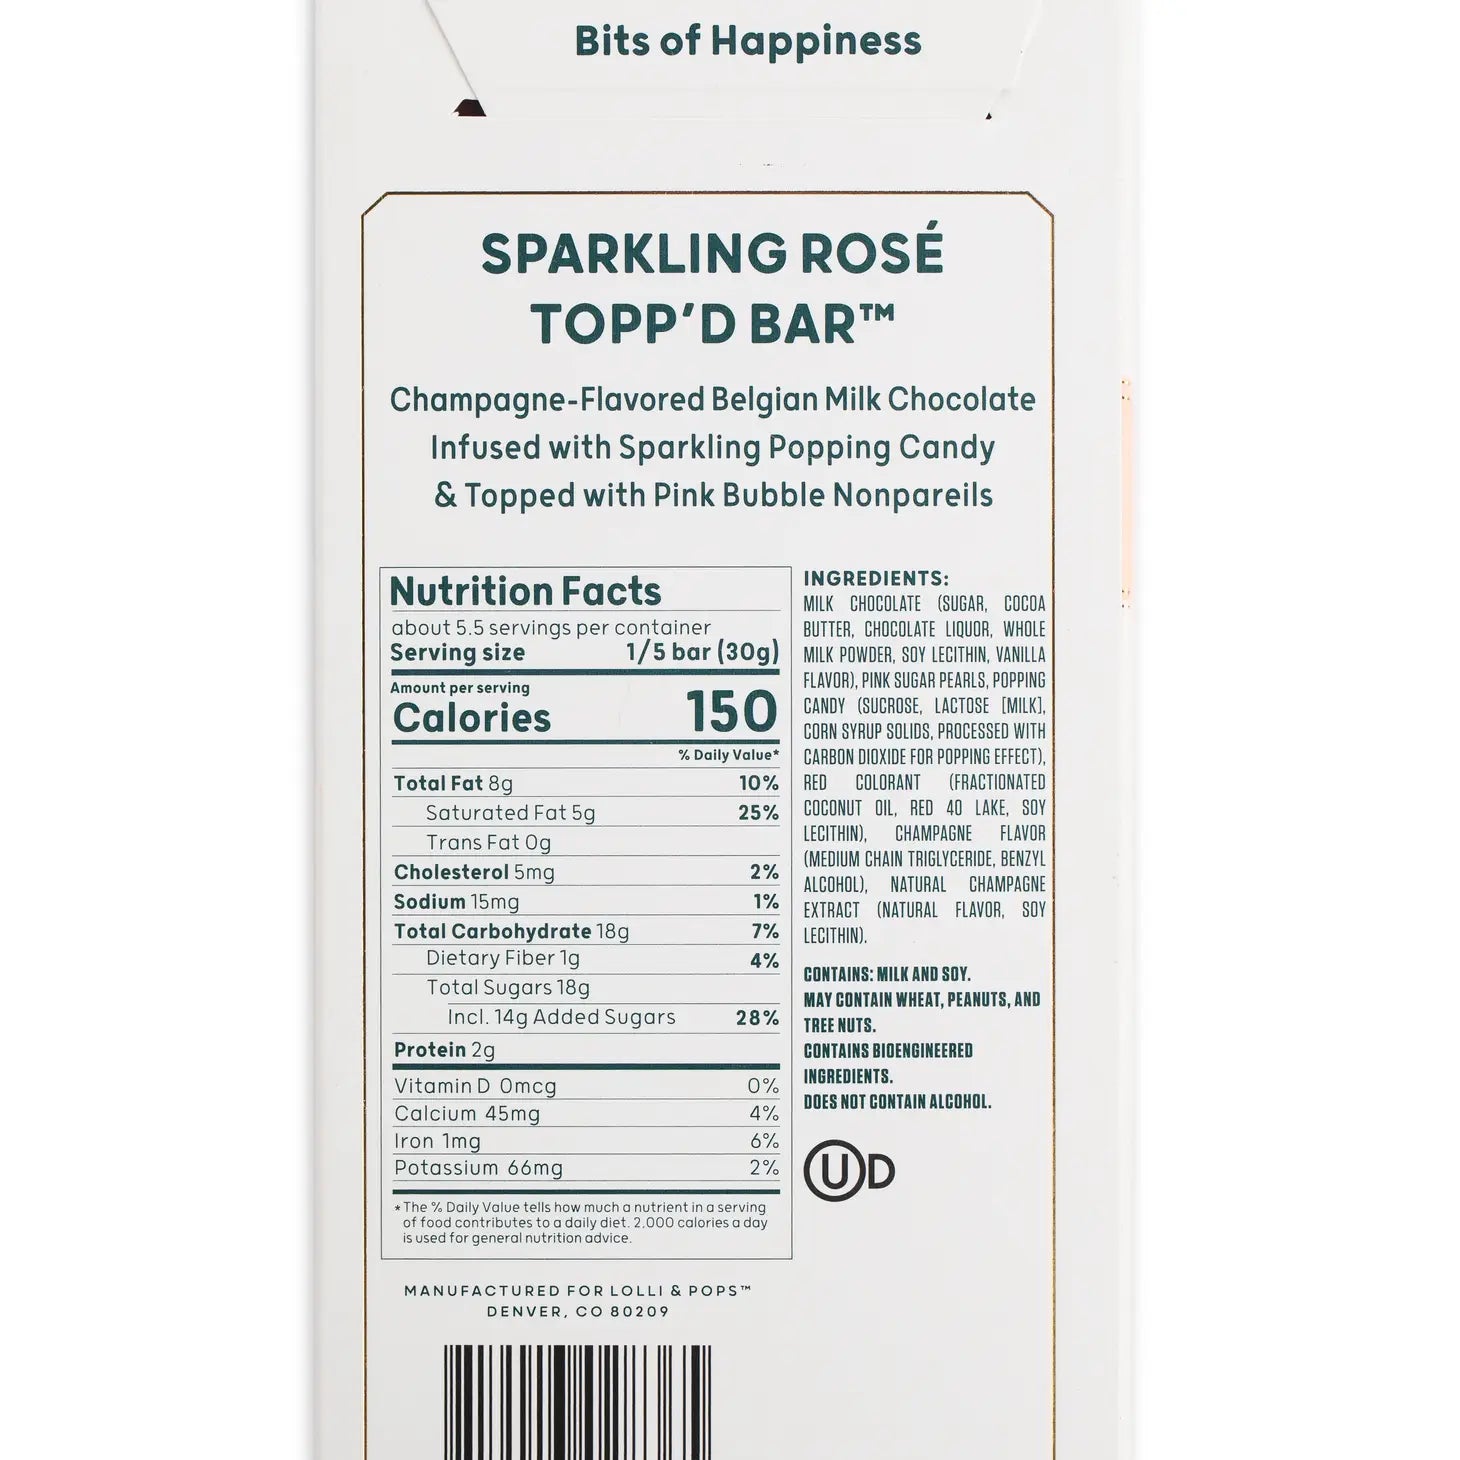 Sparkling Rose Topp'D Bar